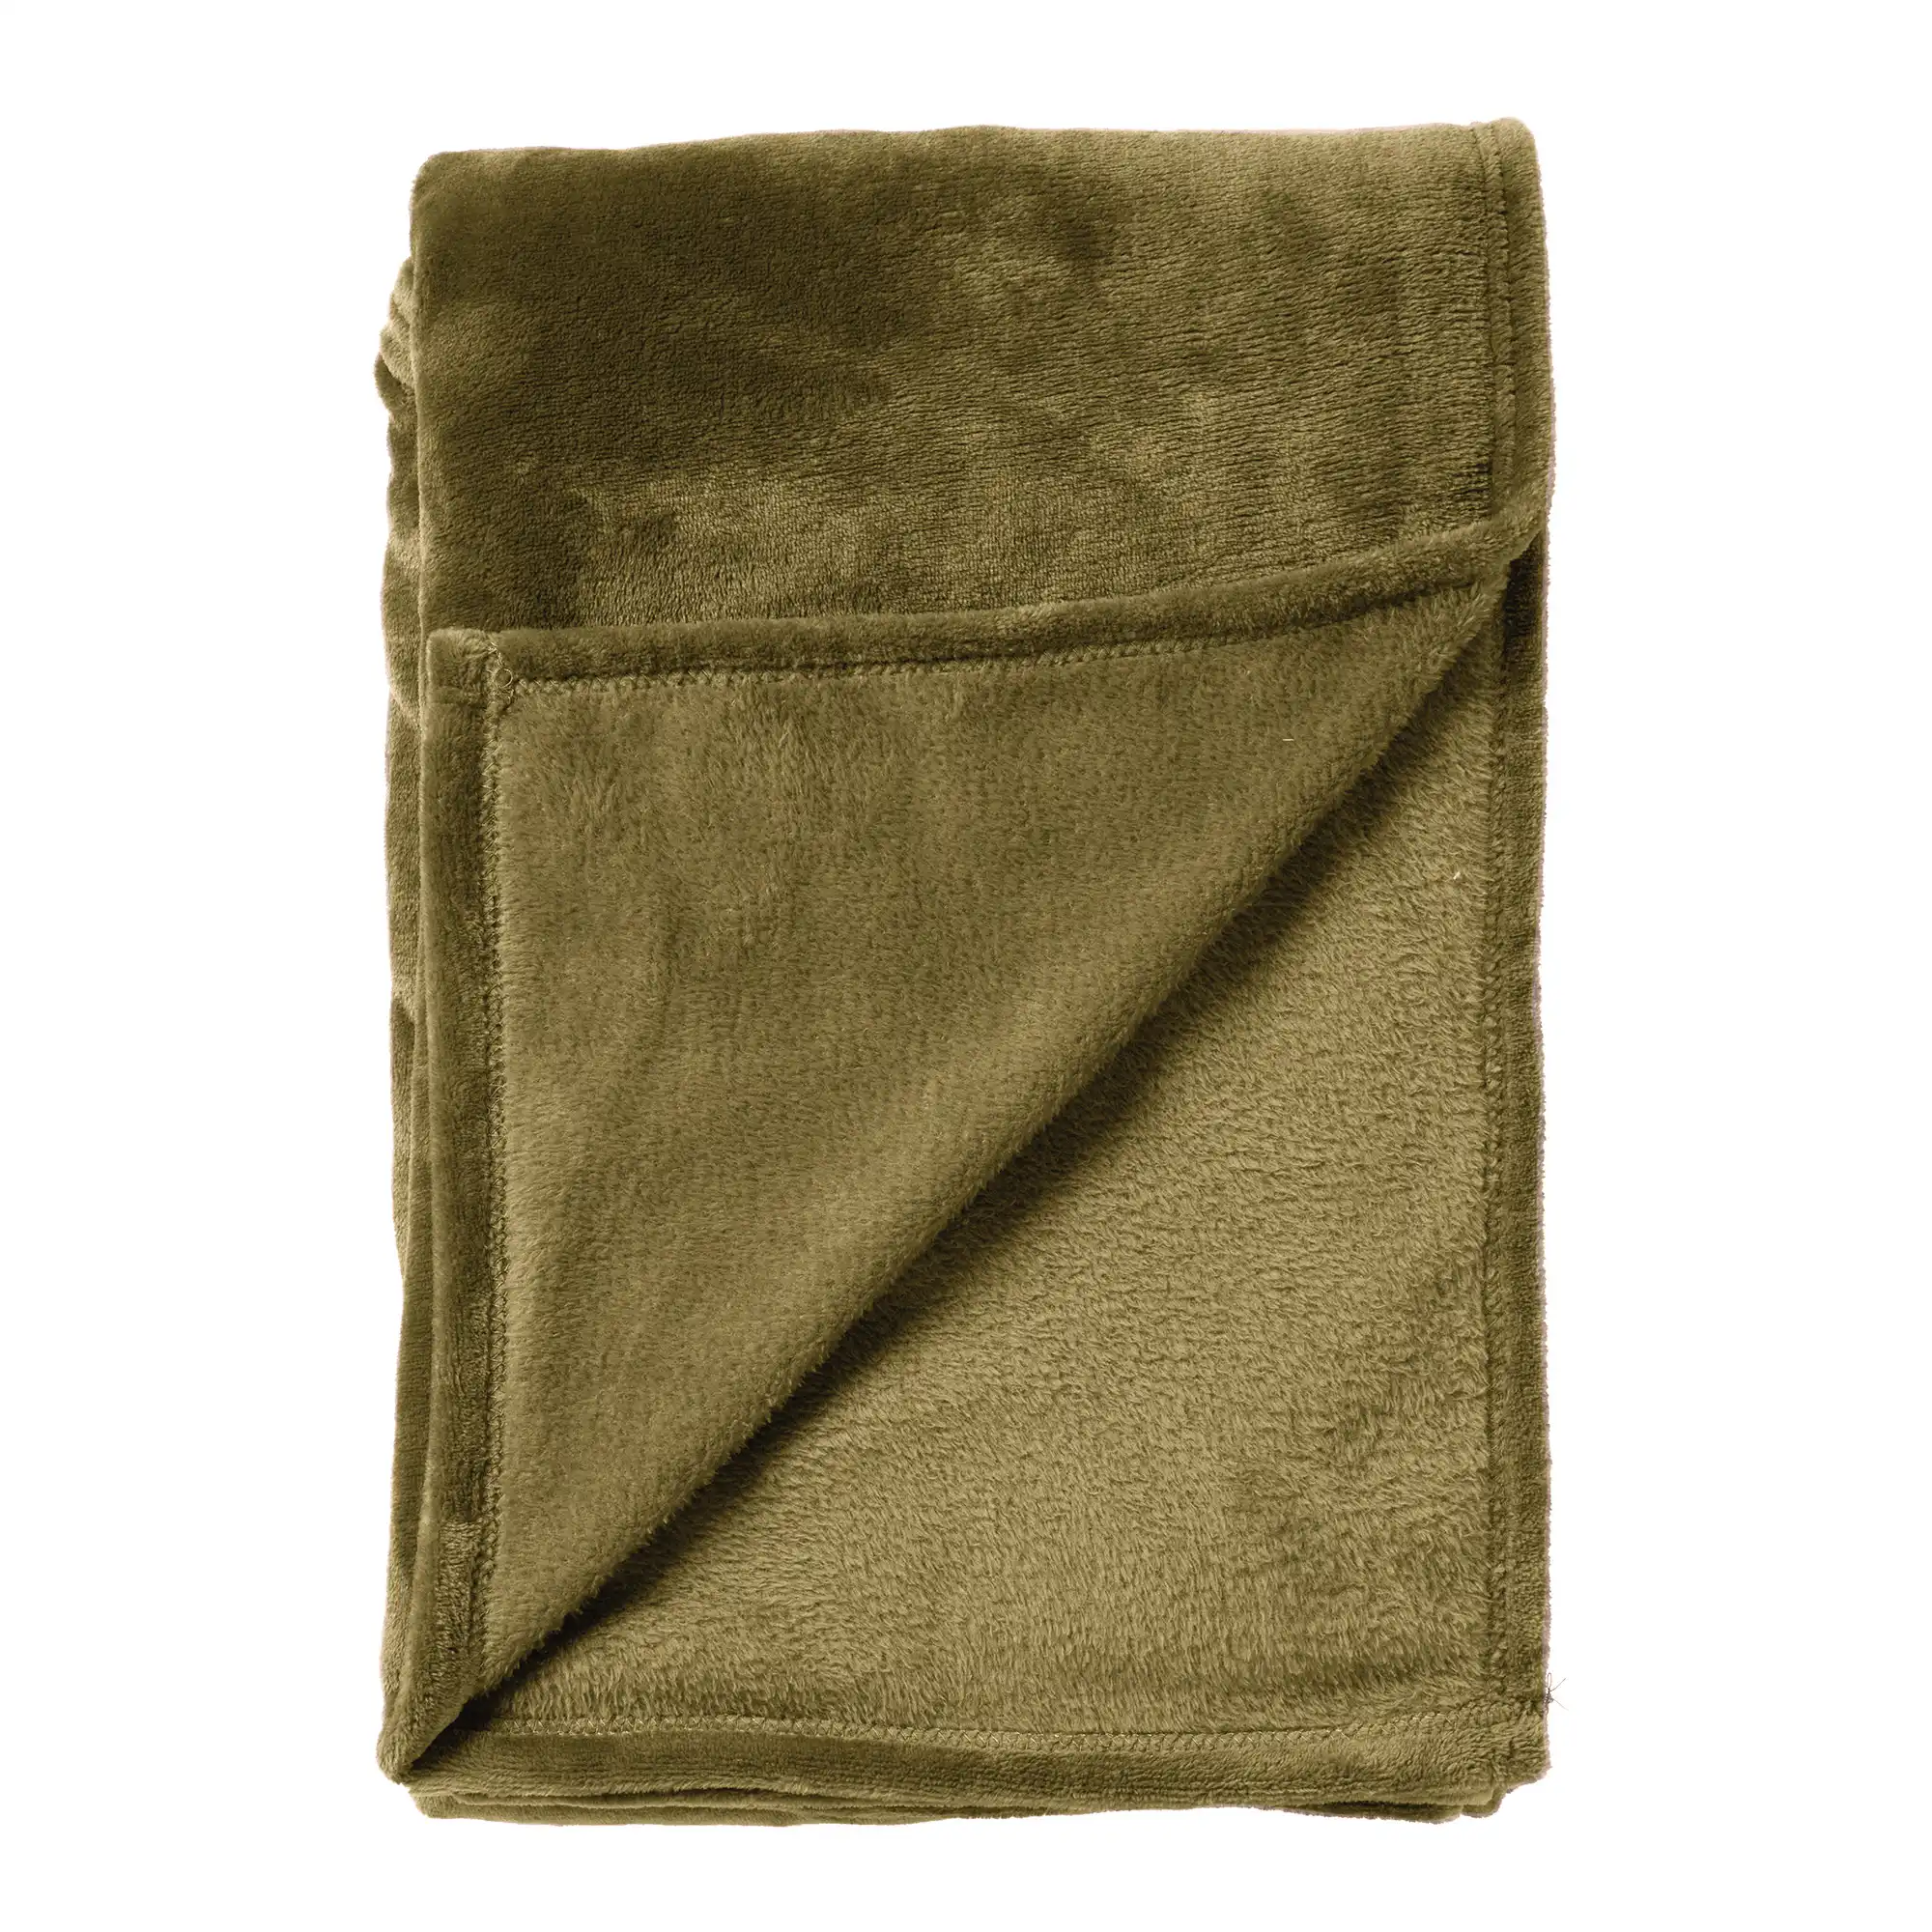 BILLY - Plaid 150x200 cm - flannel fleece - superzacht - Military Olive - groen